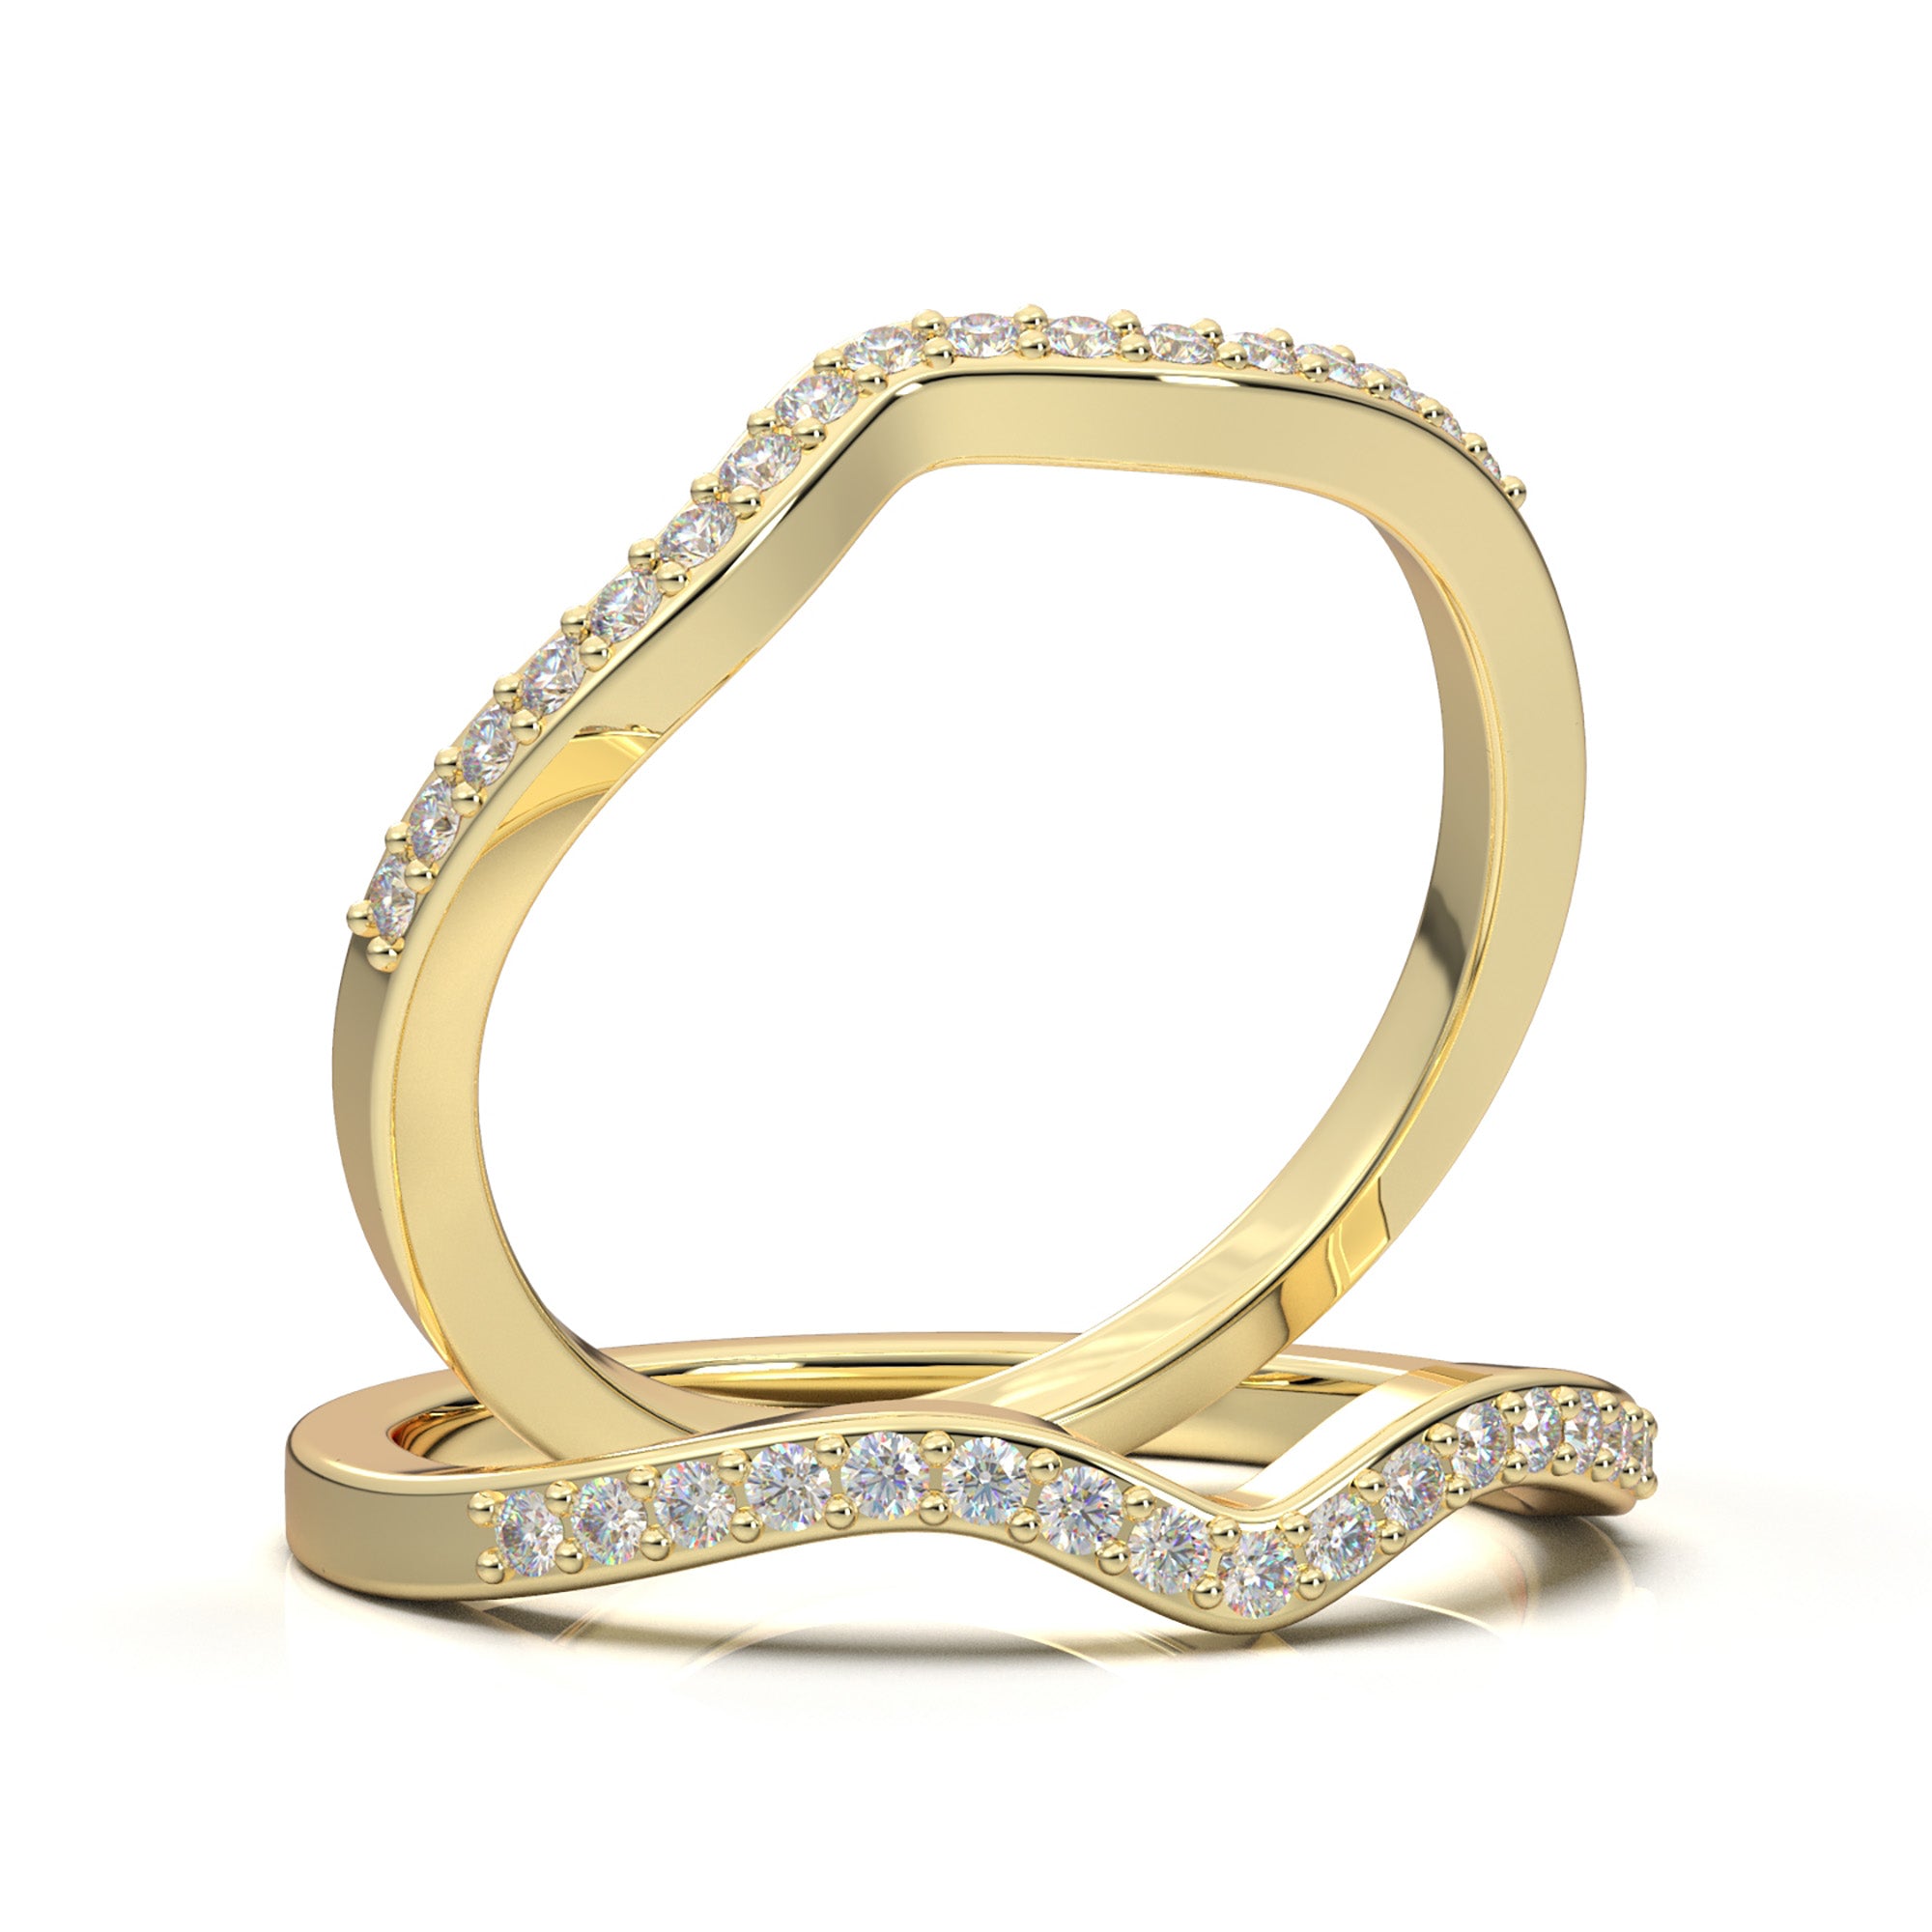 Delicate Grace Ring - Alapatt Diamonds